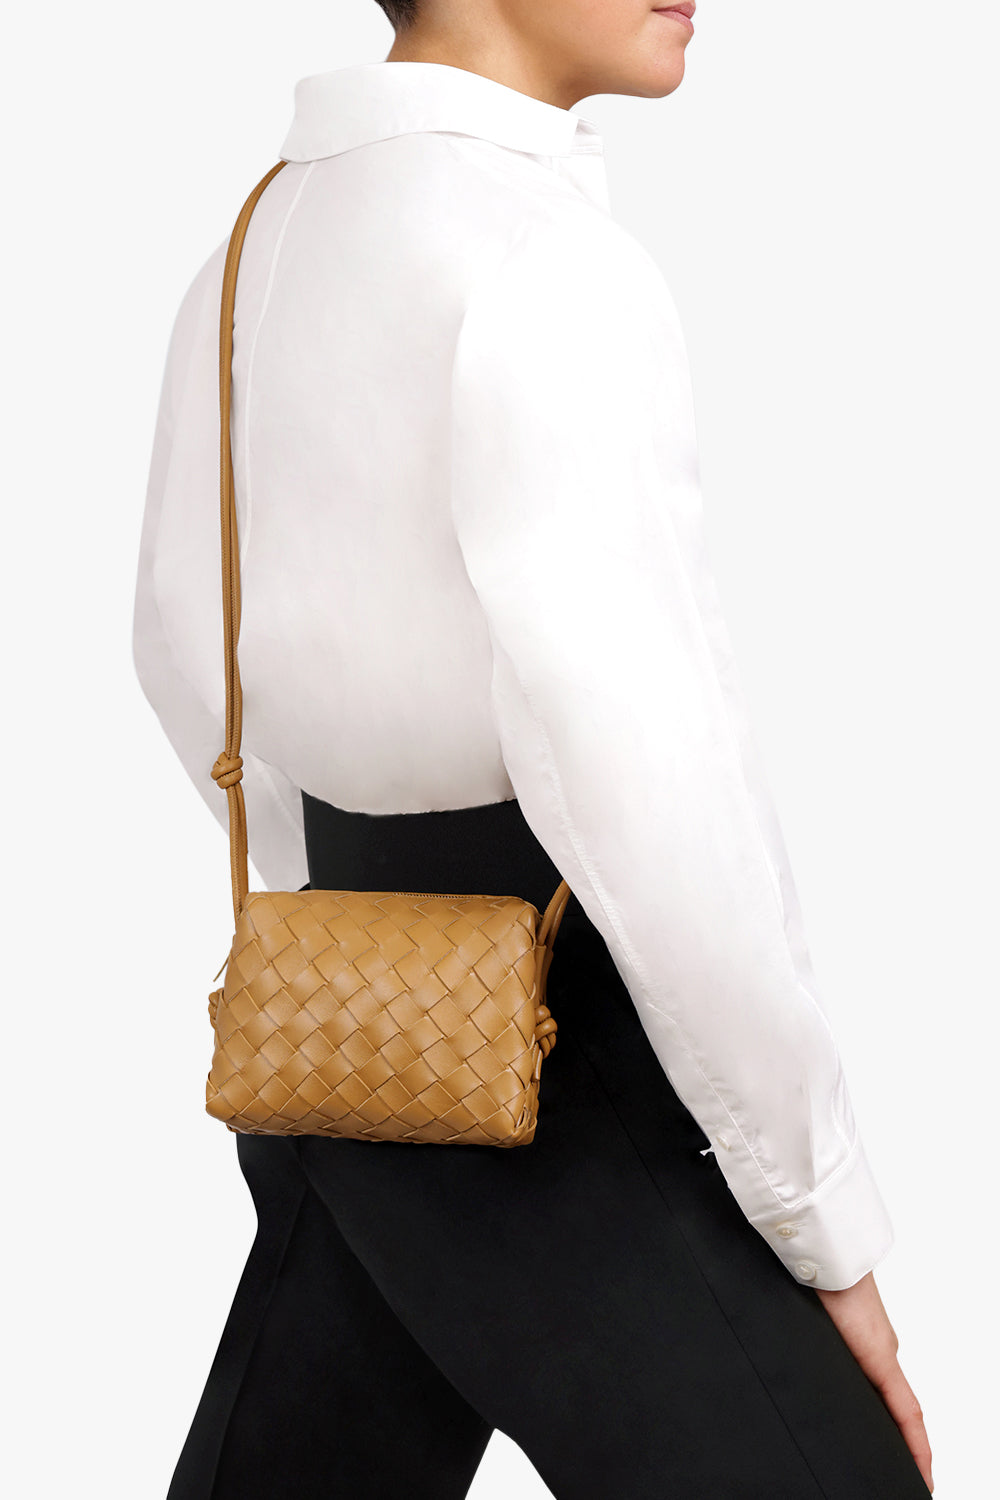 Mini Loop intrecciato leather shoulder bag